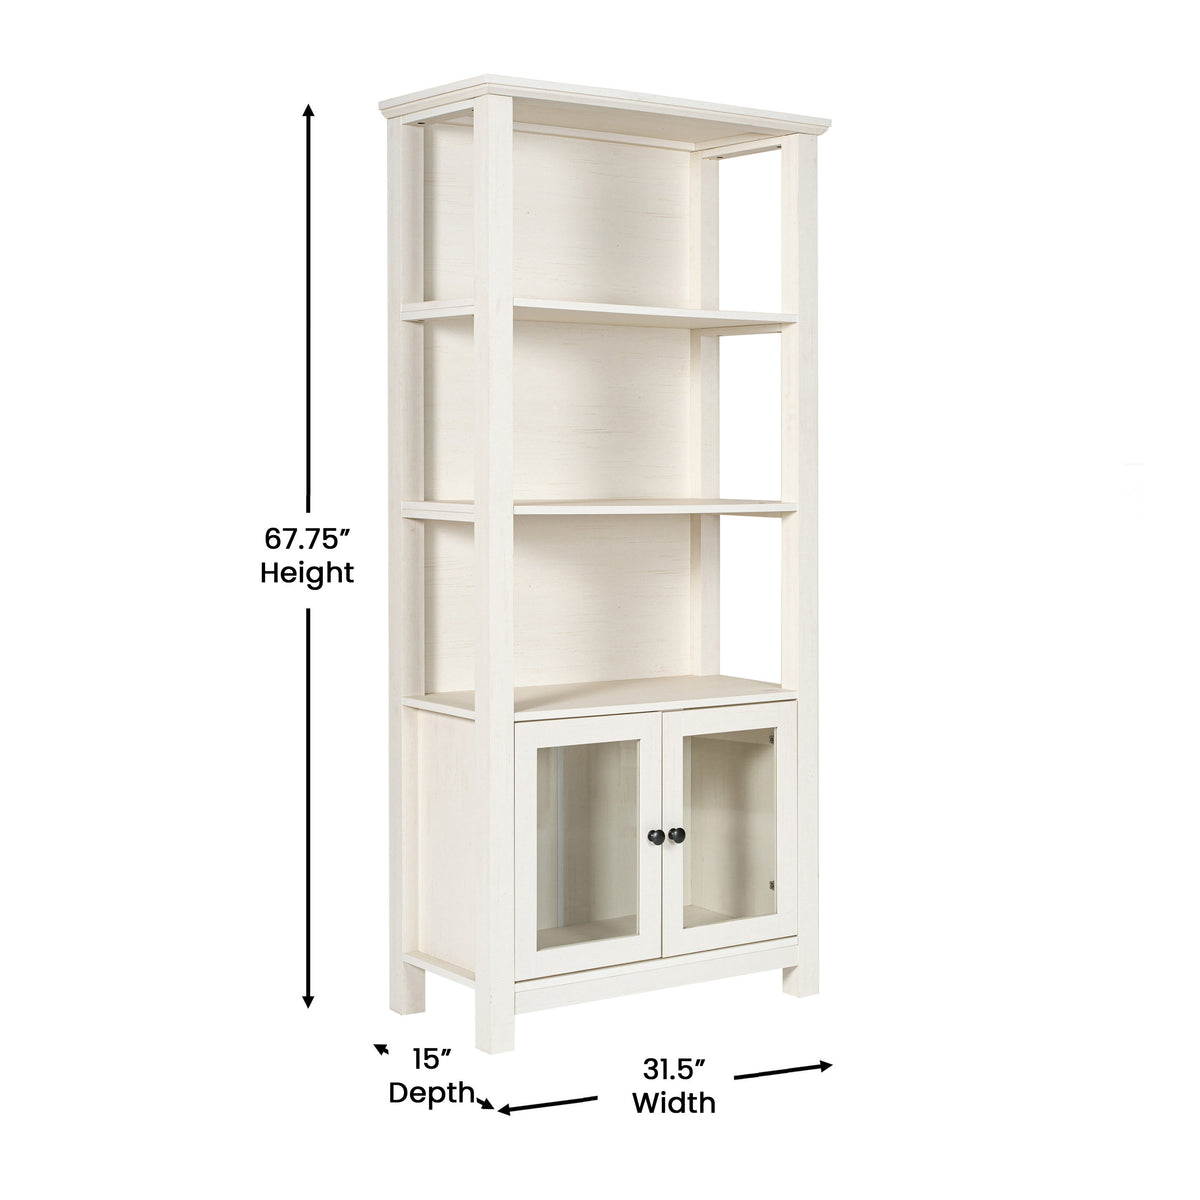 White |#| 3 Tier Farmhouse Style Storage Cabinet Bookshelf with Glass Doors - White